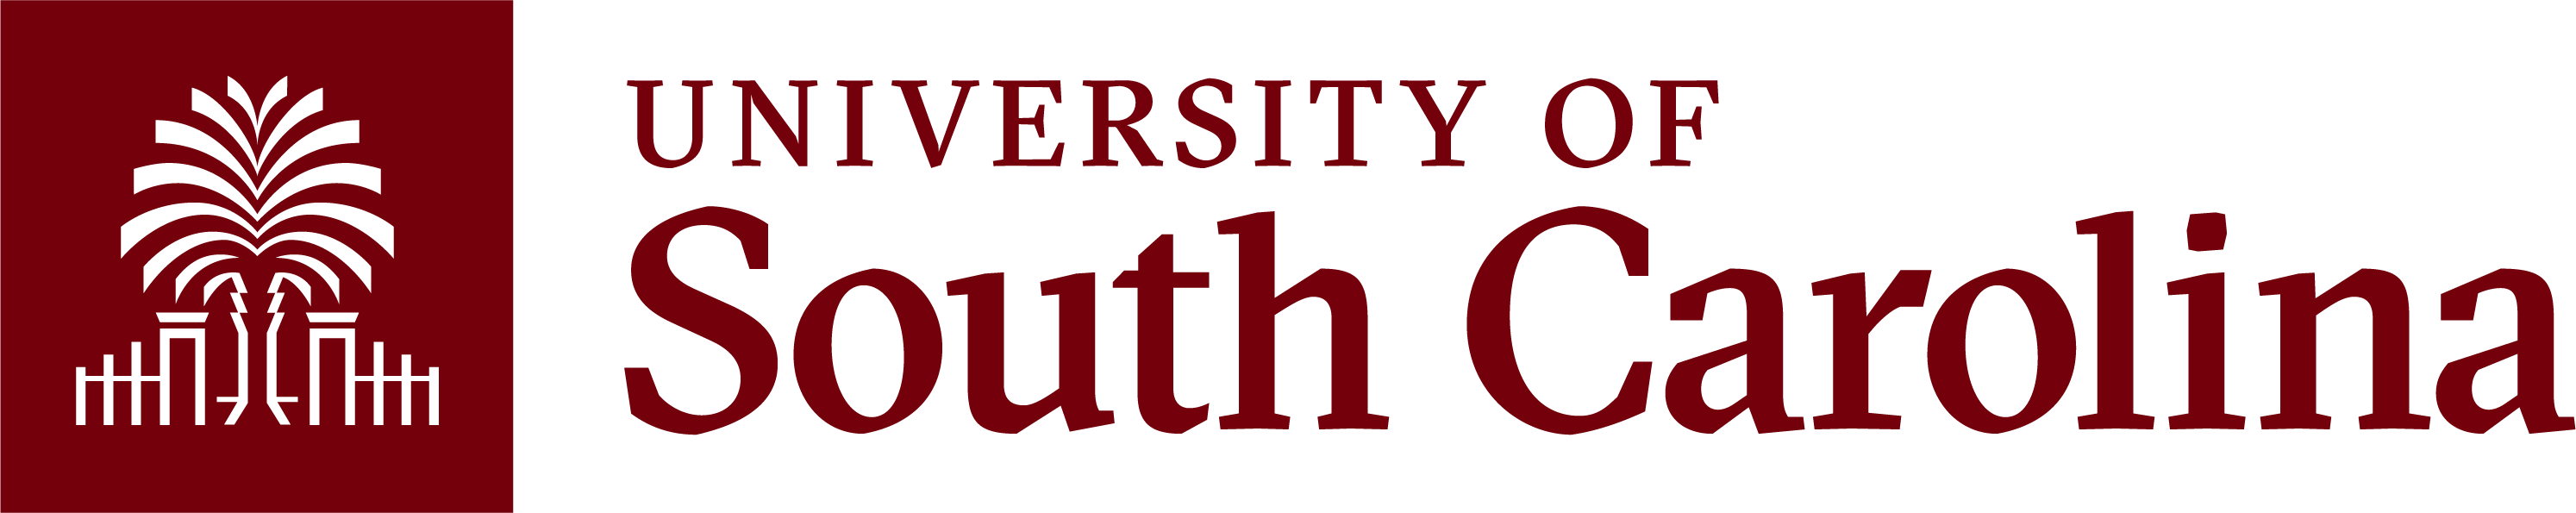 Logo University of South Carolina Horizontal